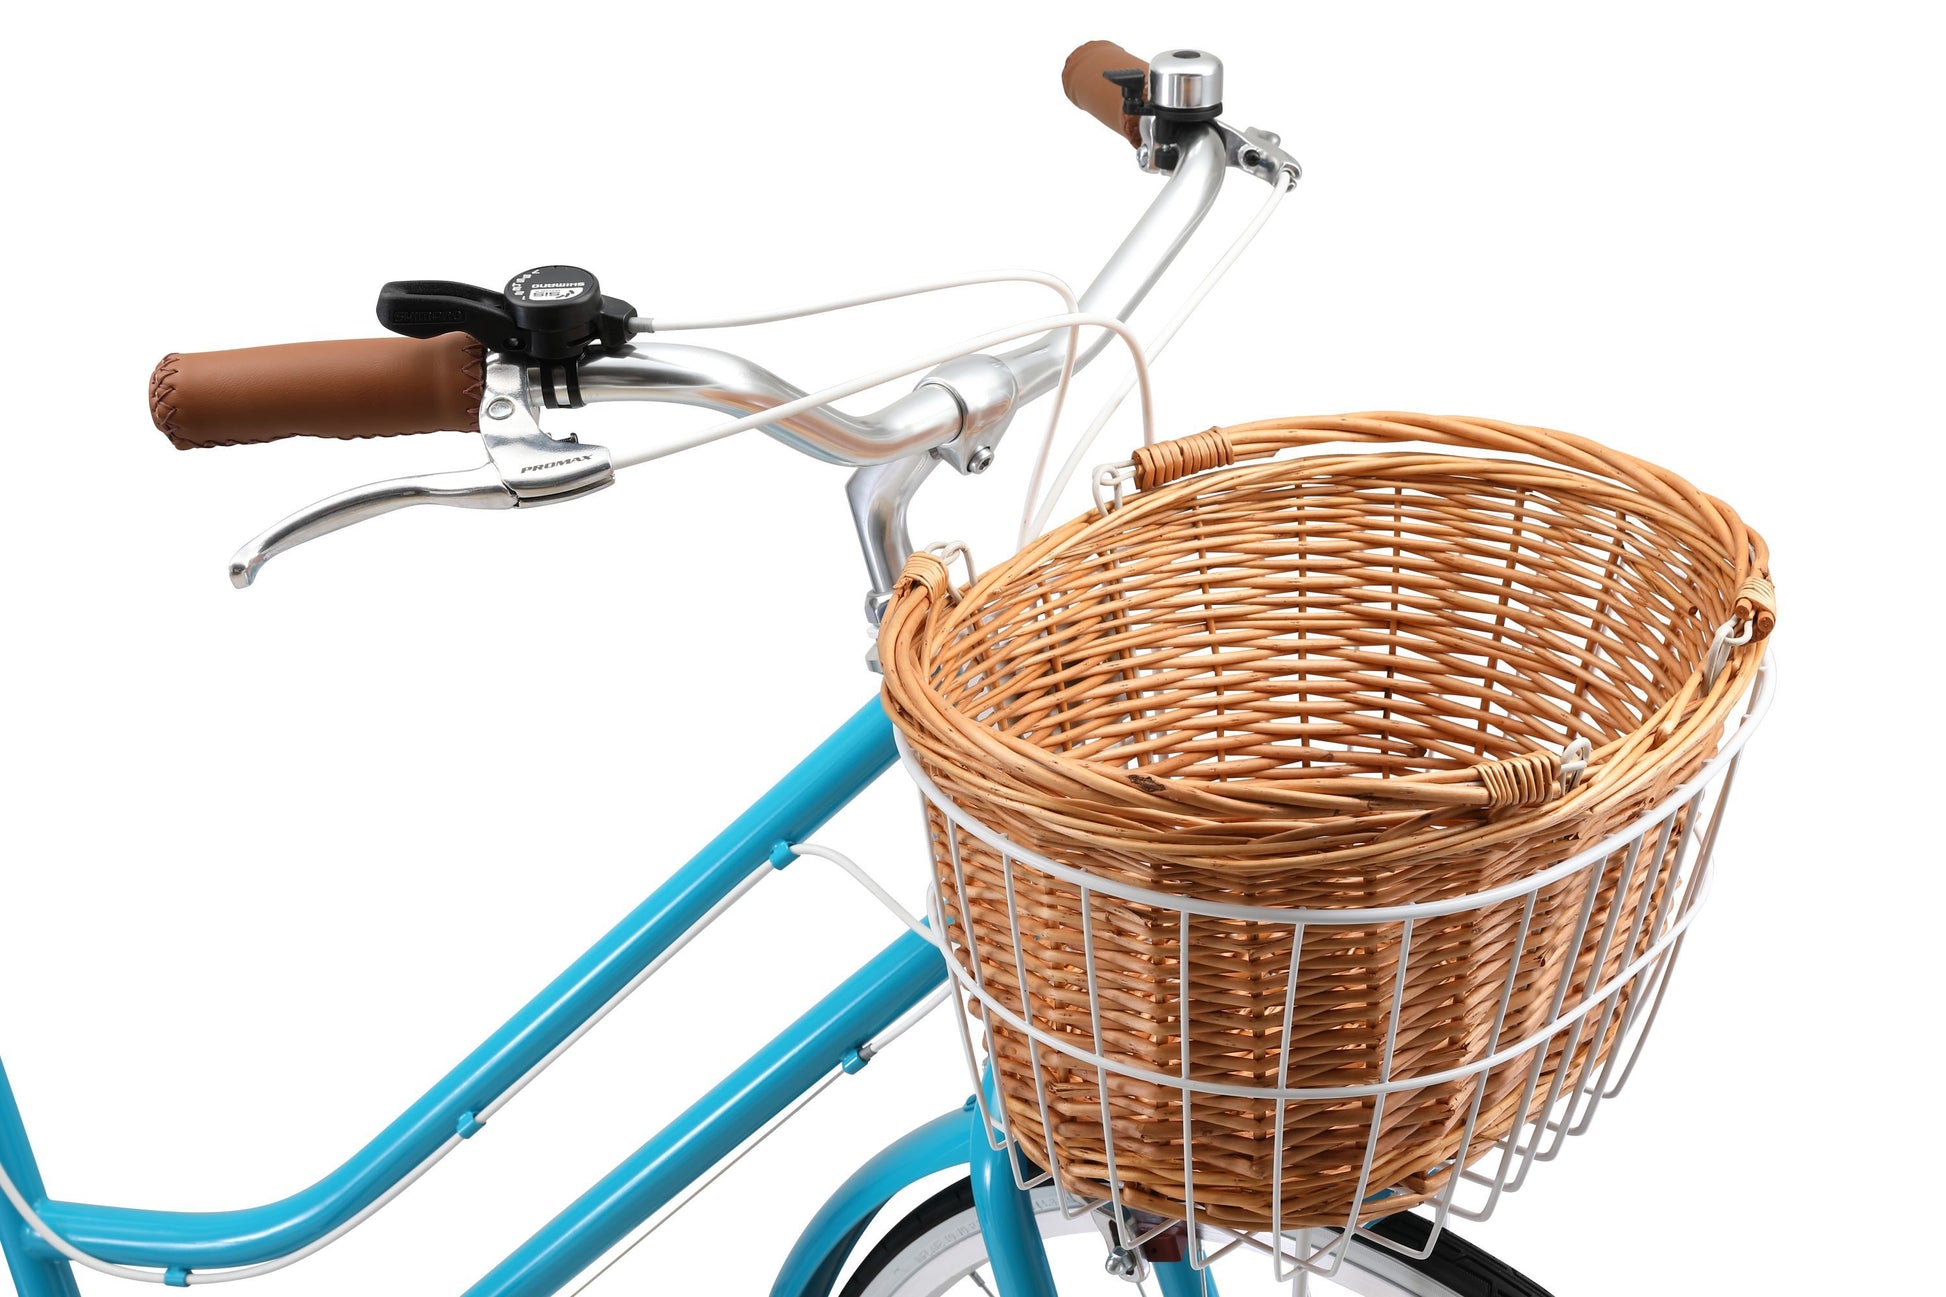 Ladies Classic Plus Vintage Bike in aqua showing front basket and vintage style handlebars from Reid Cycles Australia